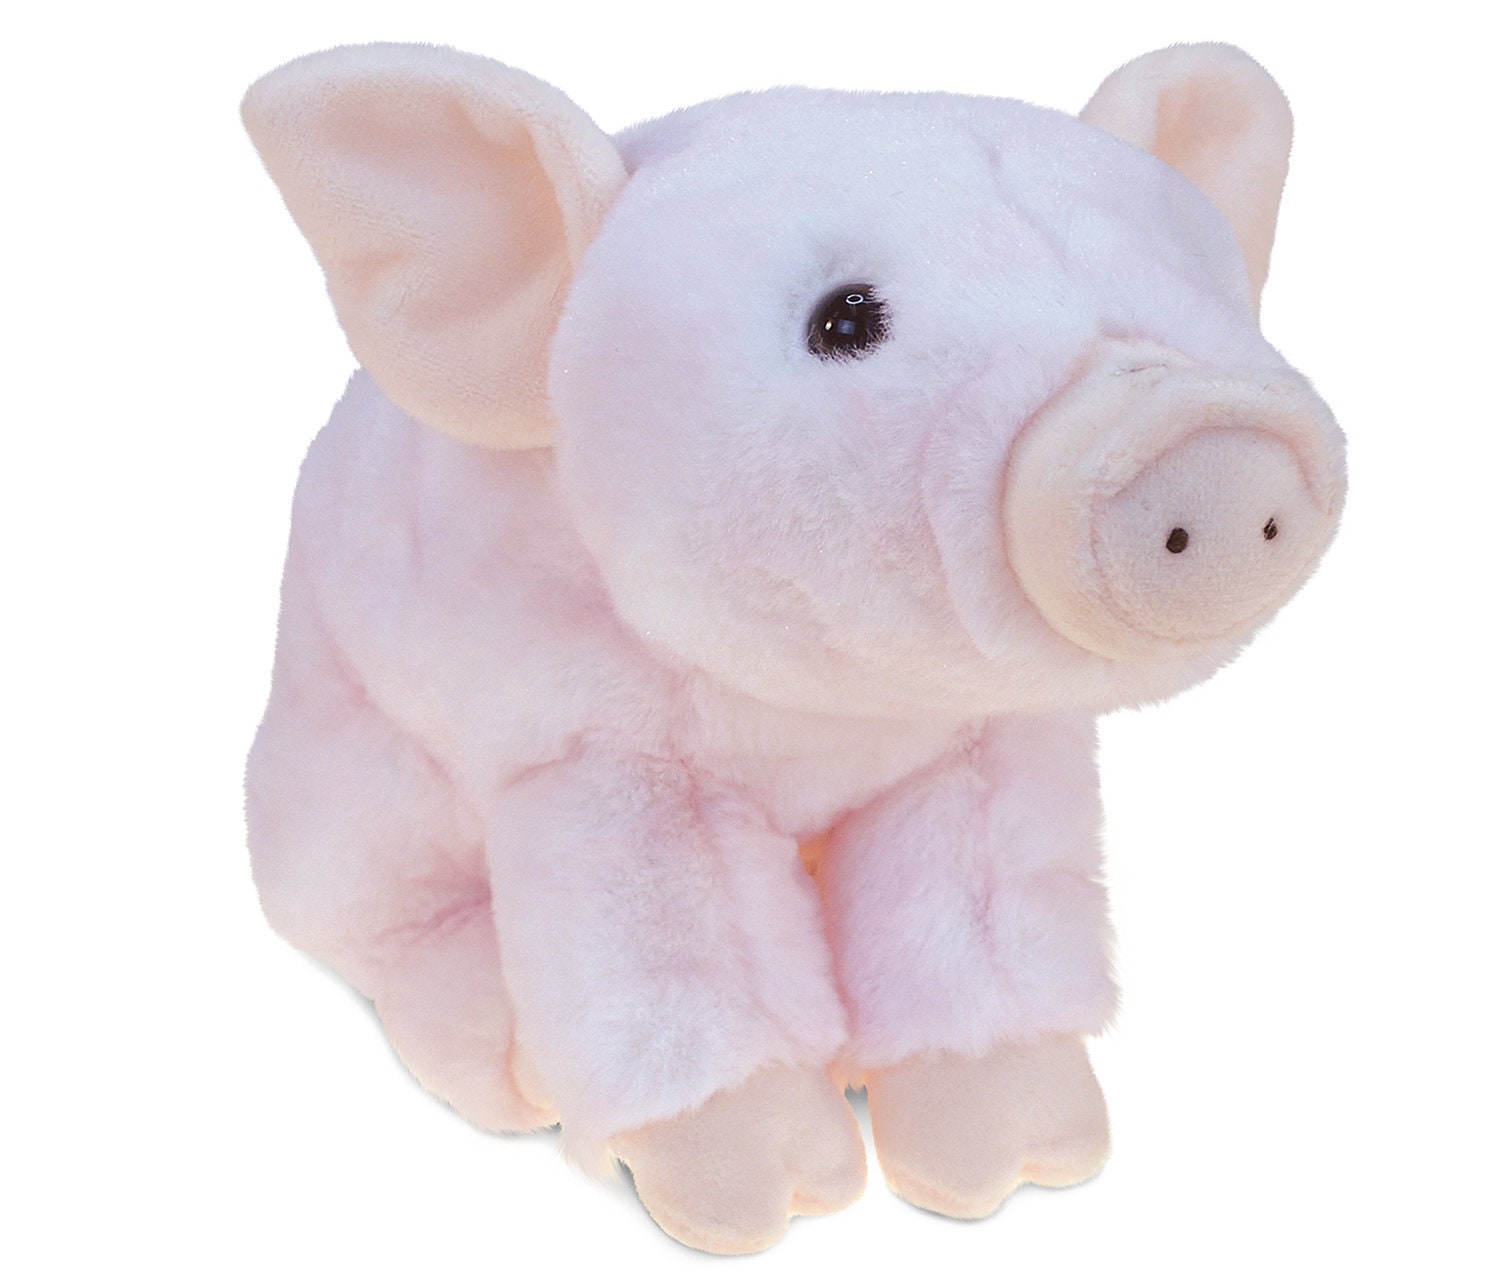 Original Ice King Bear Lifelike Baby Pig Stuffed Animal Piggy Piglet Plush Toy 13 Inches Length 